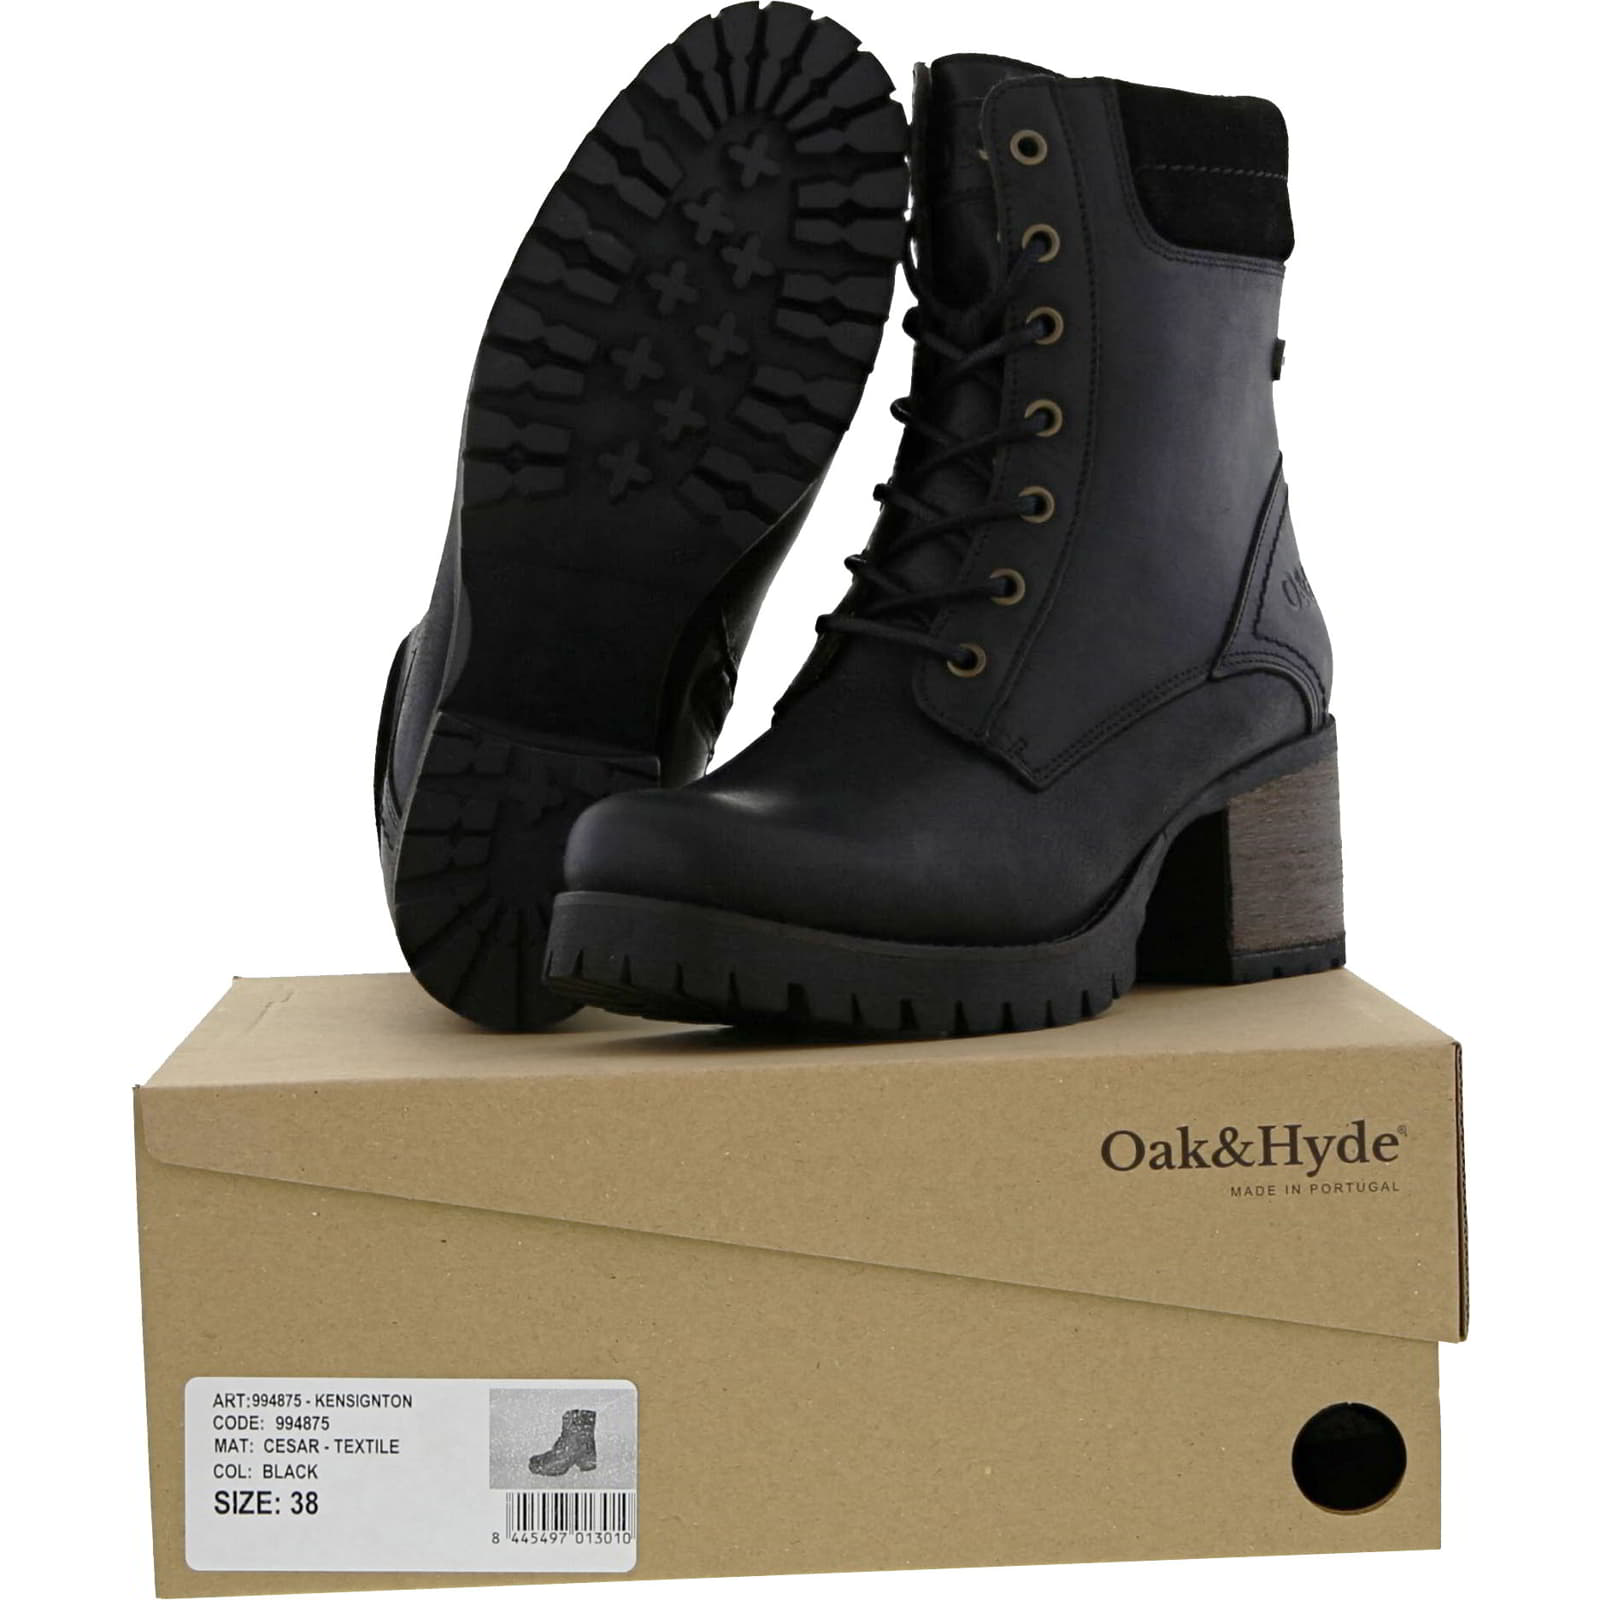 Womens Kensington Leather Ankle Boots - Black